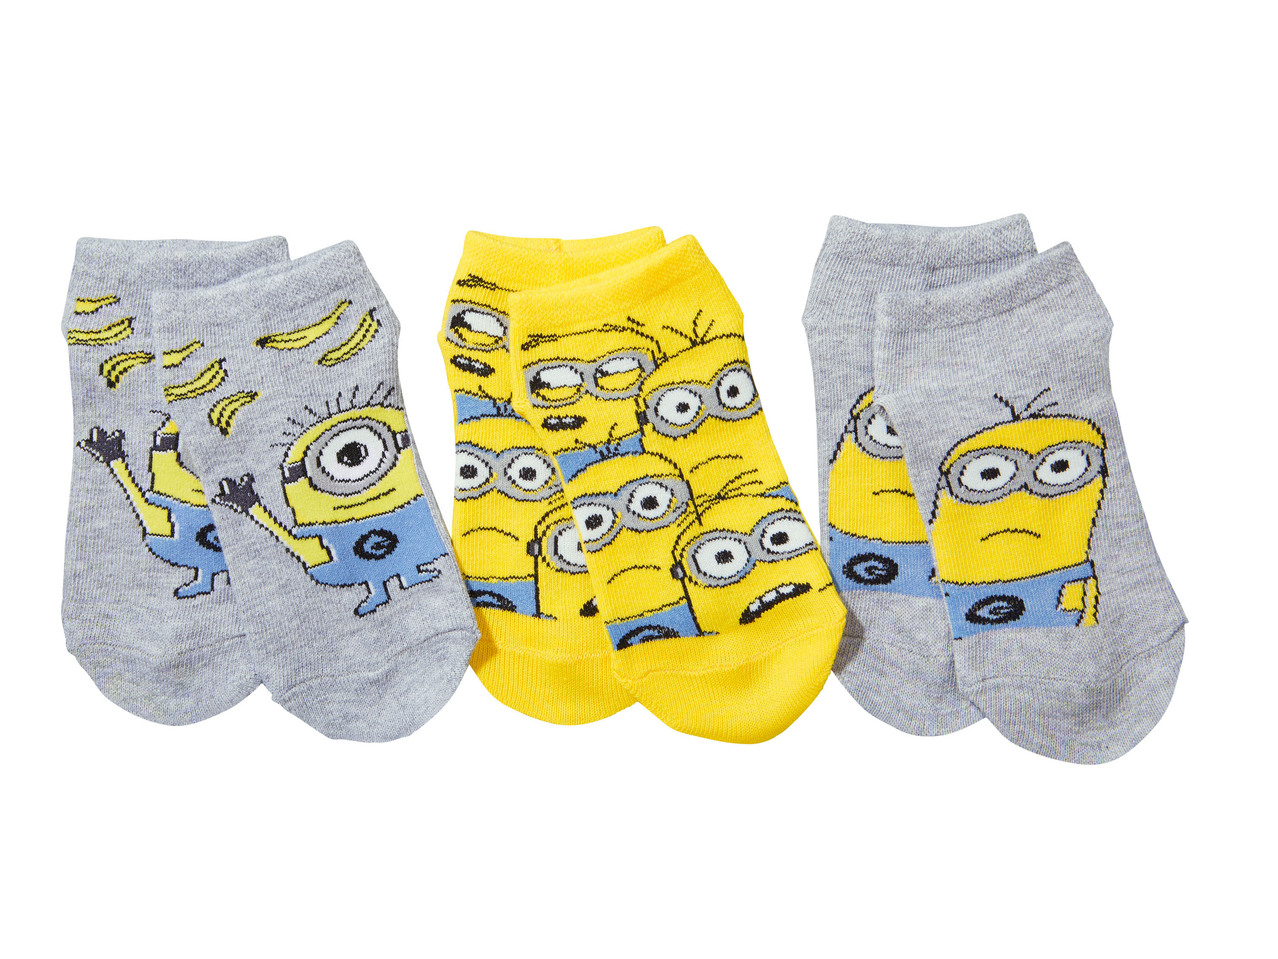 Boys' "Minions" Socks